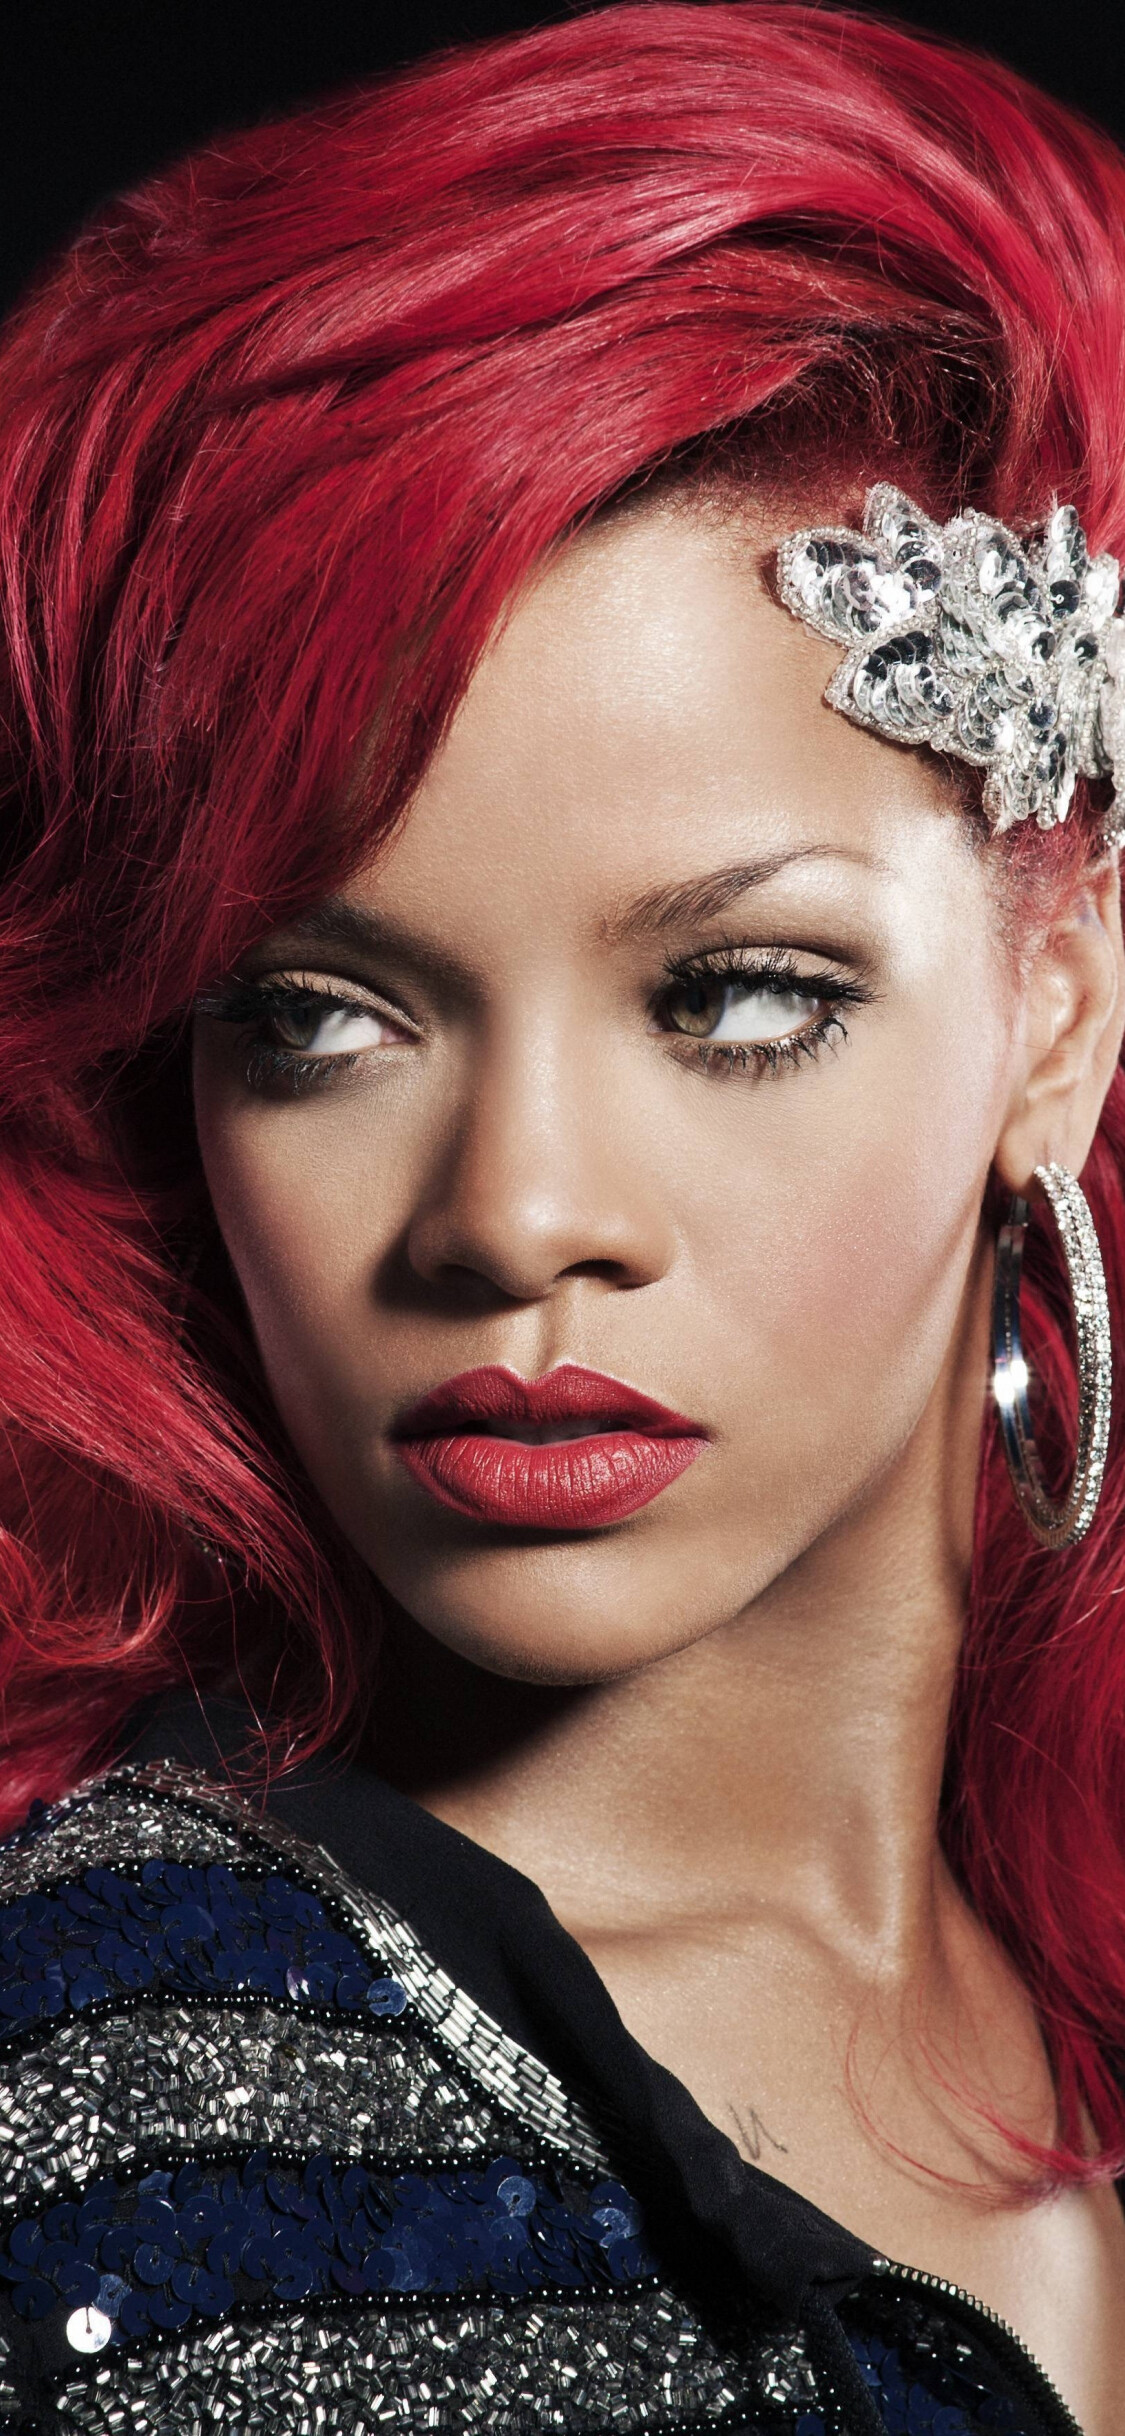 Rihanna: Hit single, Umbrella, Won Grammy Award. 1130x2440 HD Wallpaper.